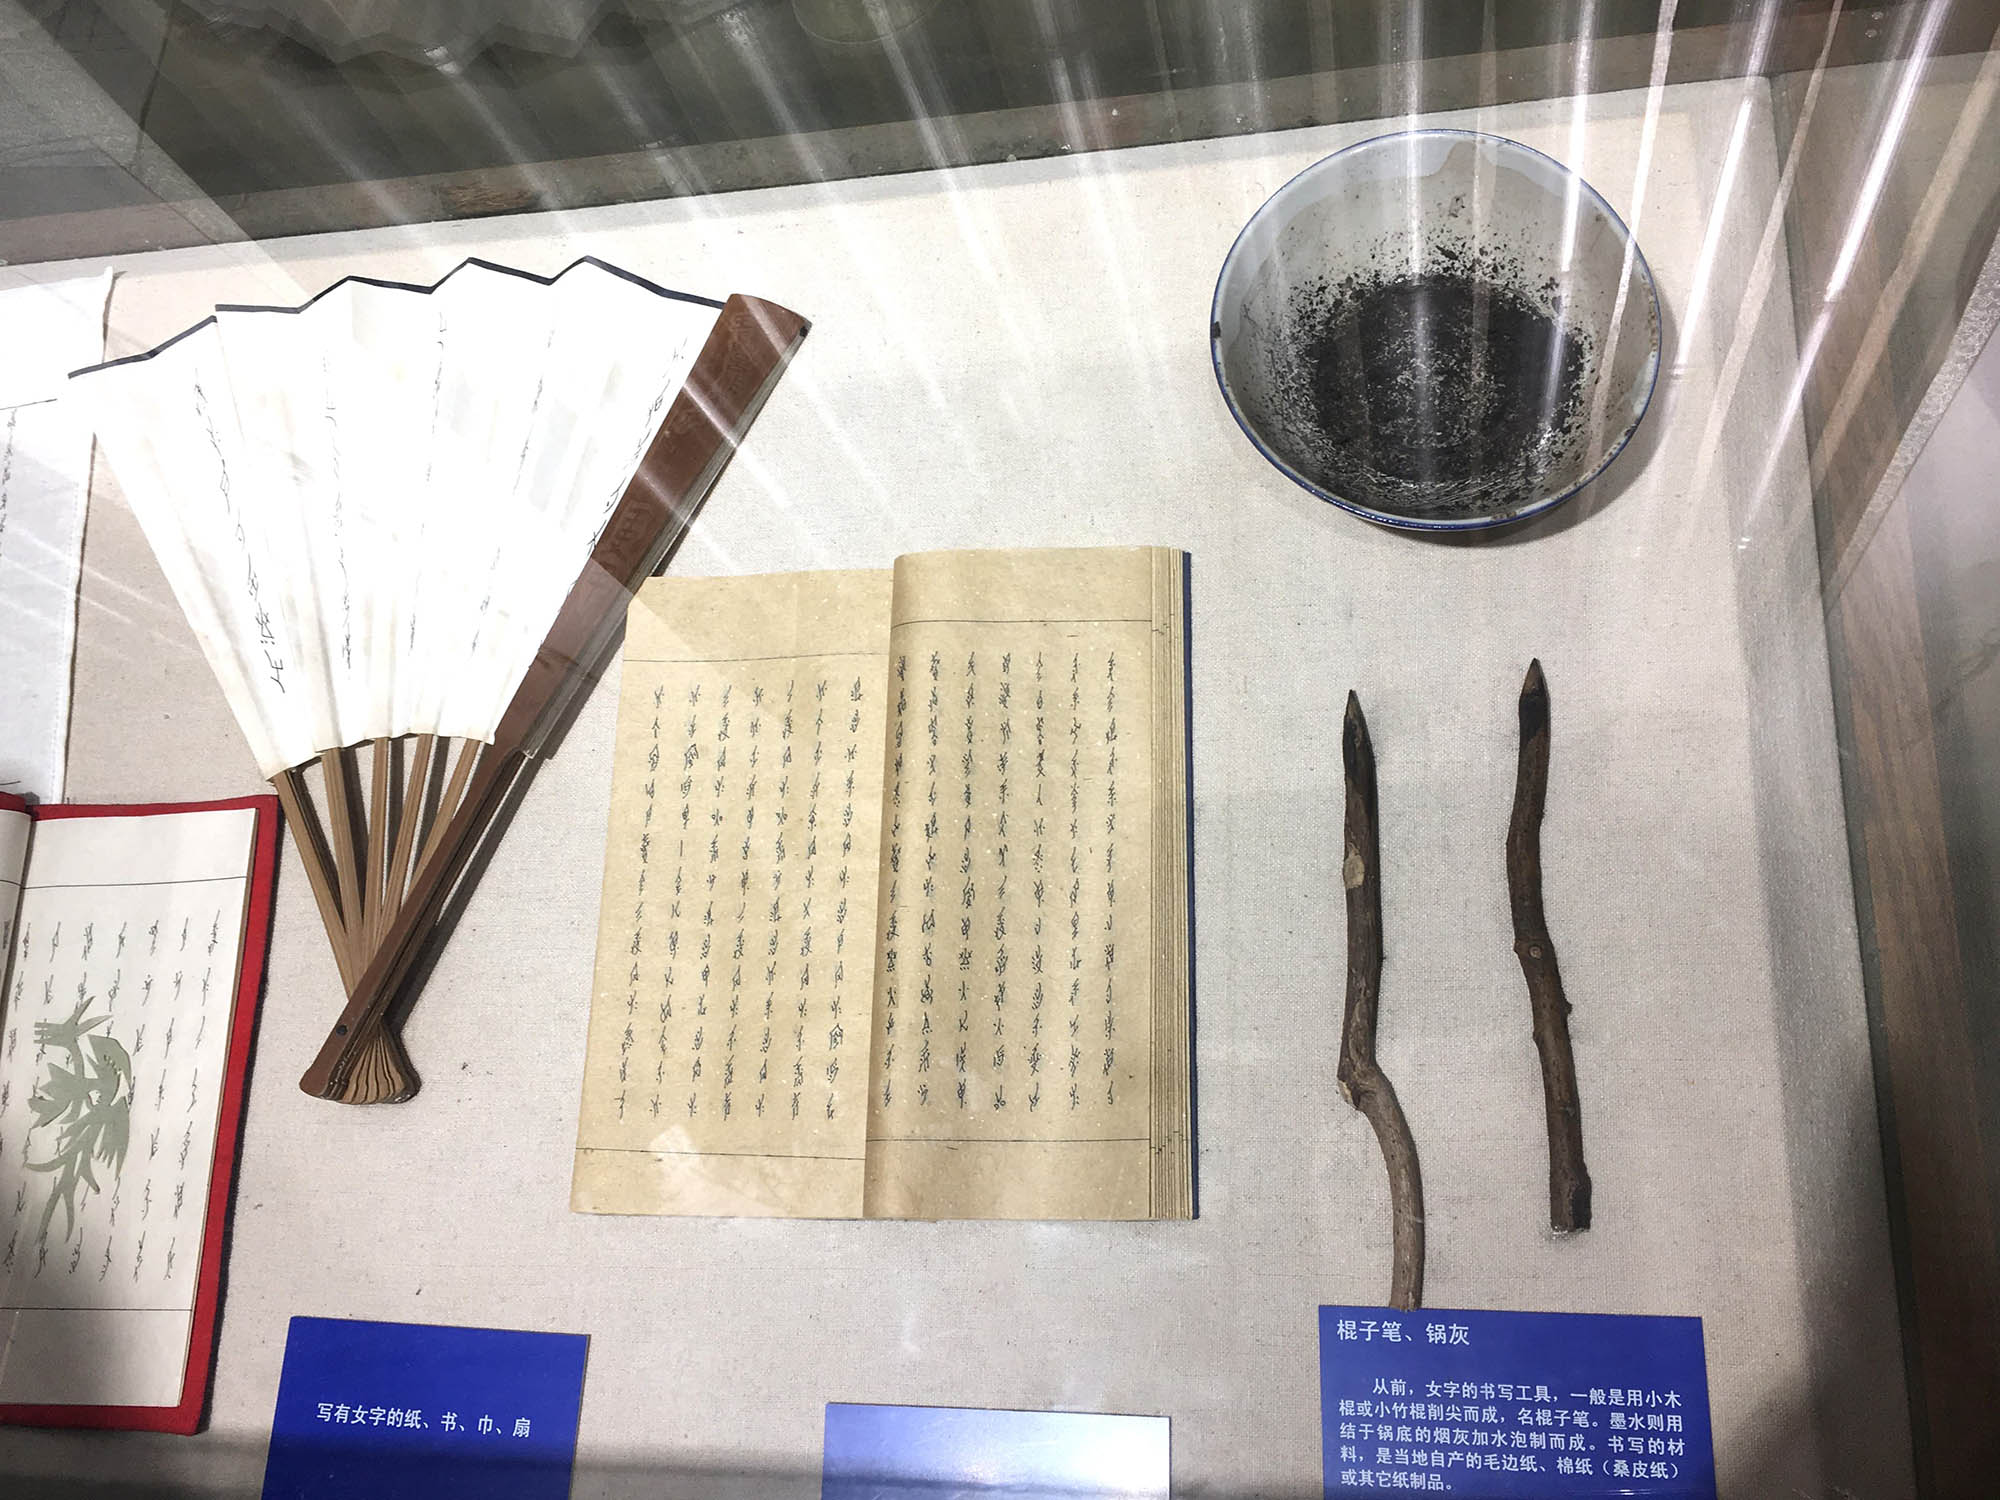 Nüshu writing tools: wood sticks, paper, wok pan ash and fan